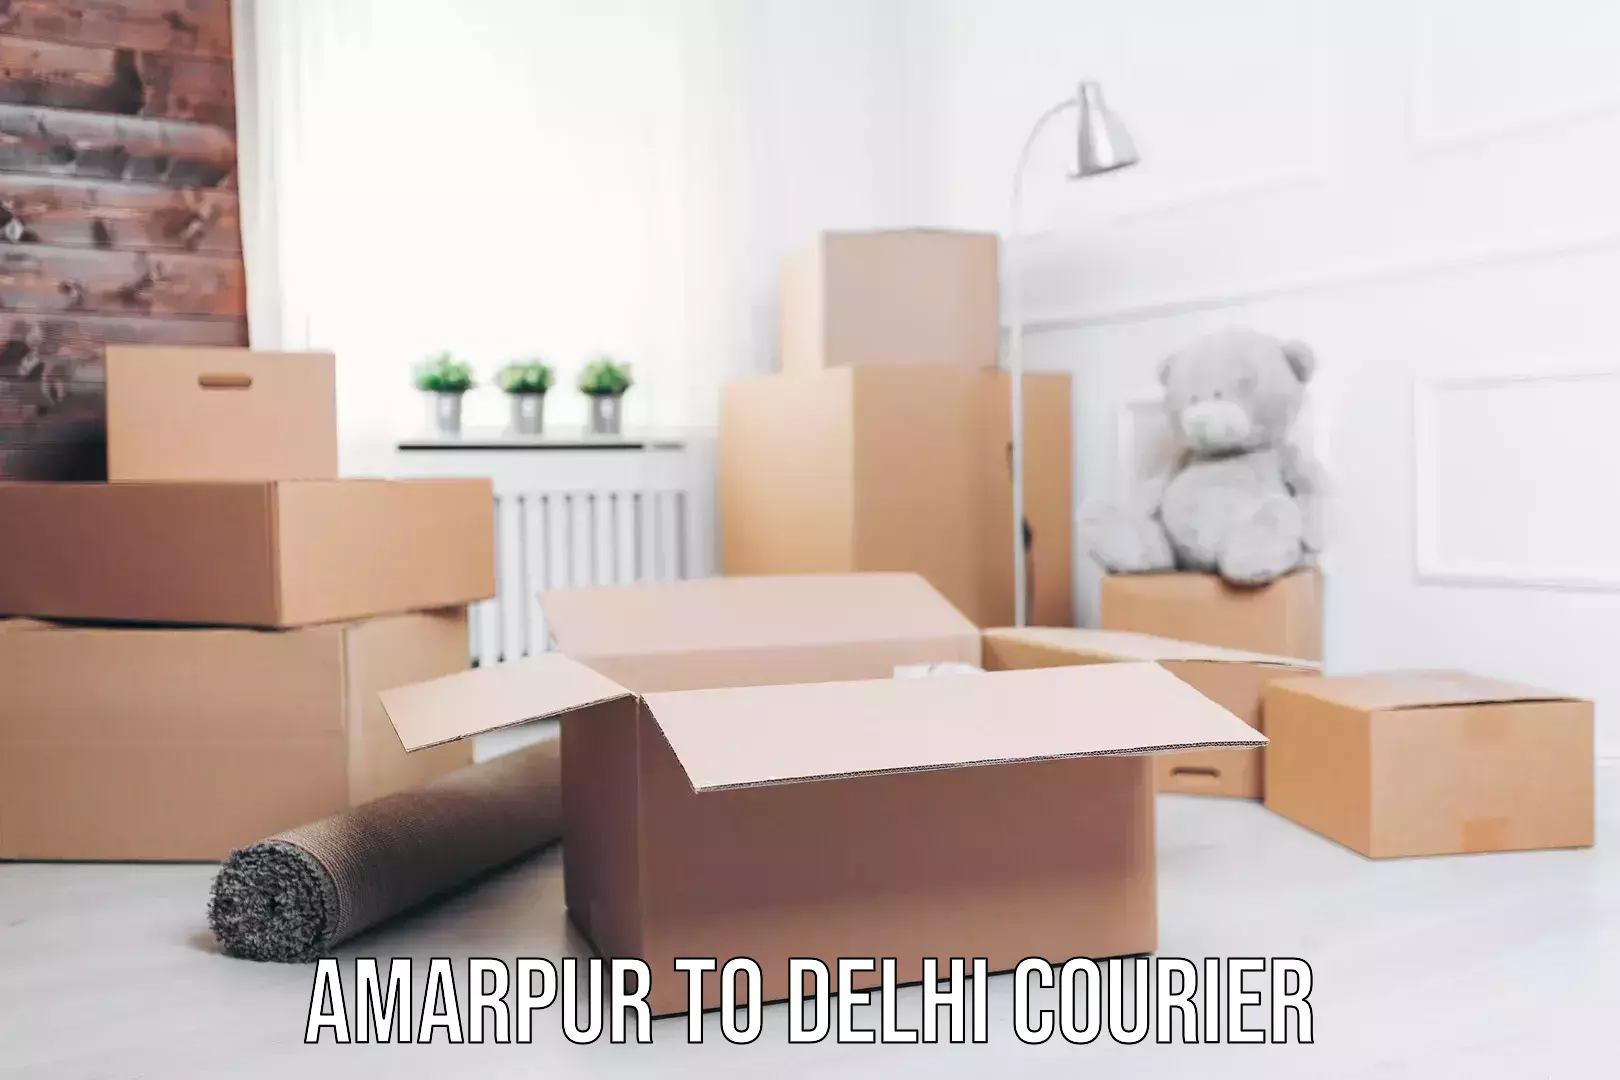 Digital courier platforms Amarpur to Delhi